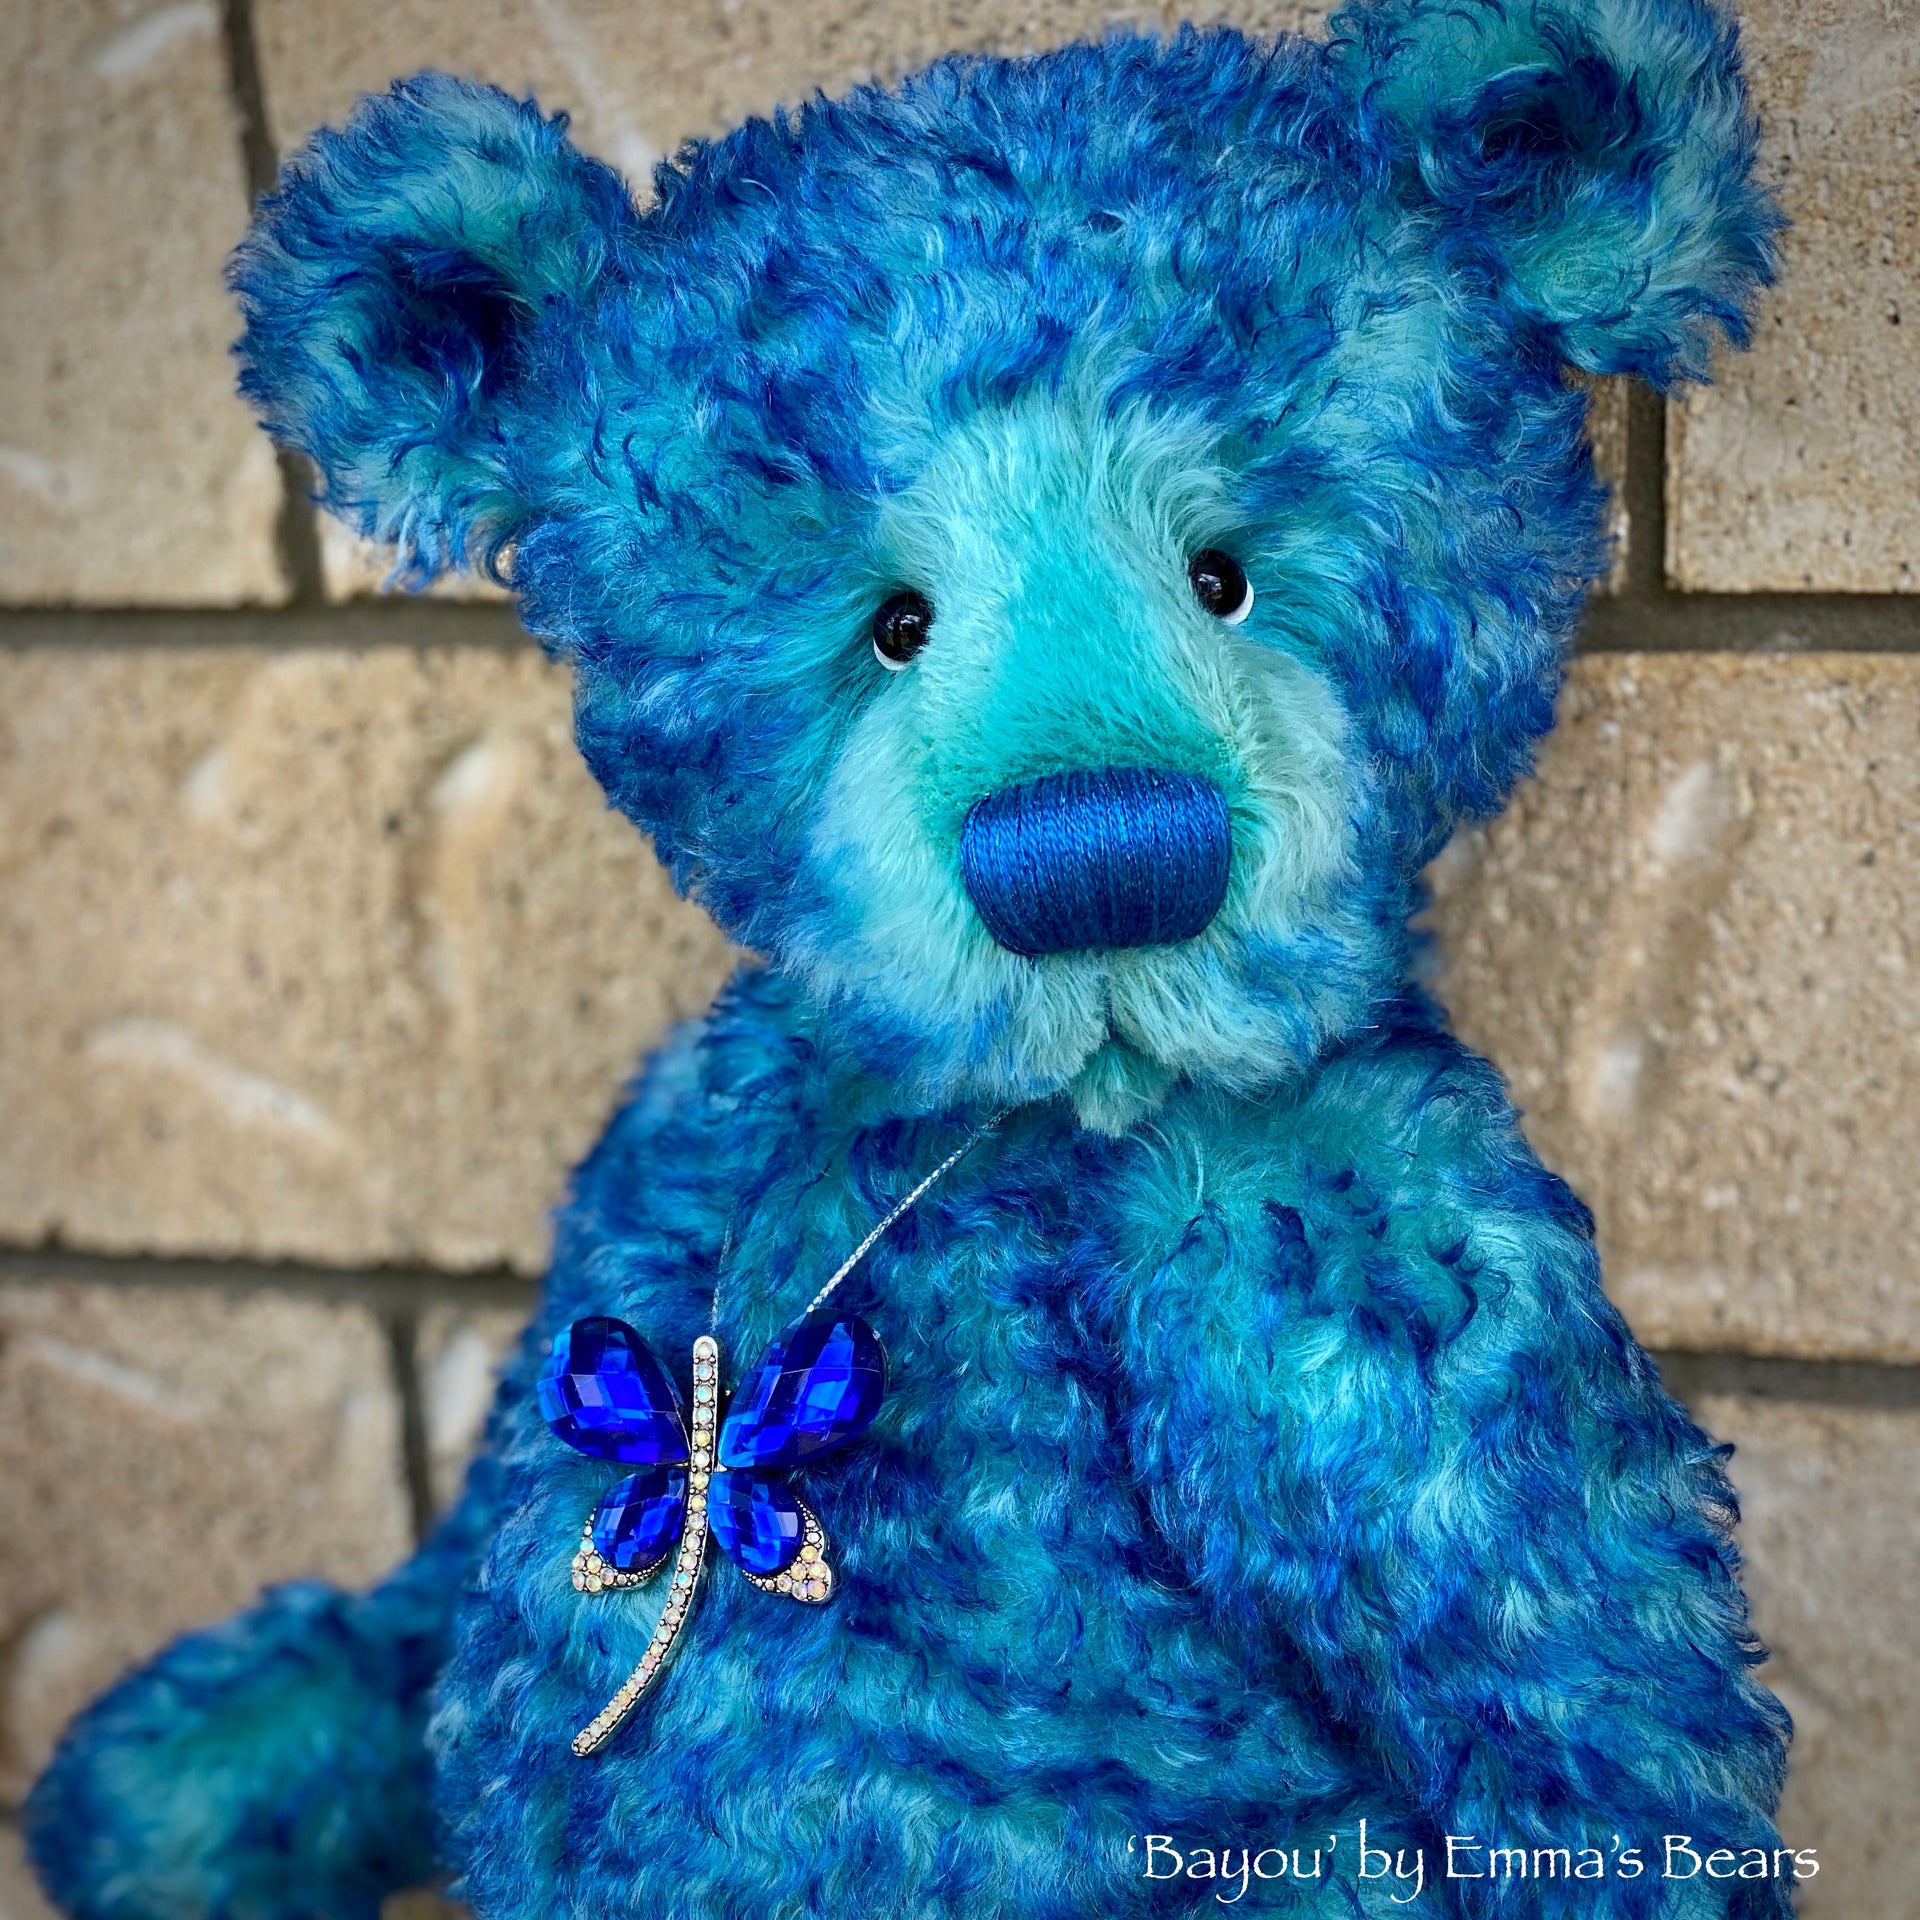 Bayou - 17" curly kid mohair bear by Emmas Bears - OOAK